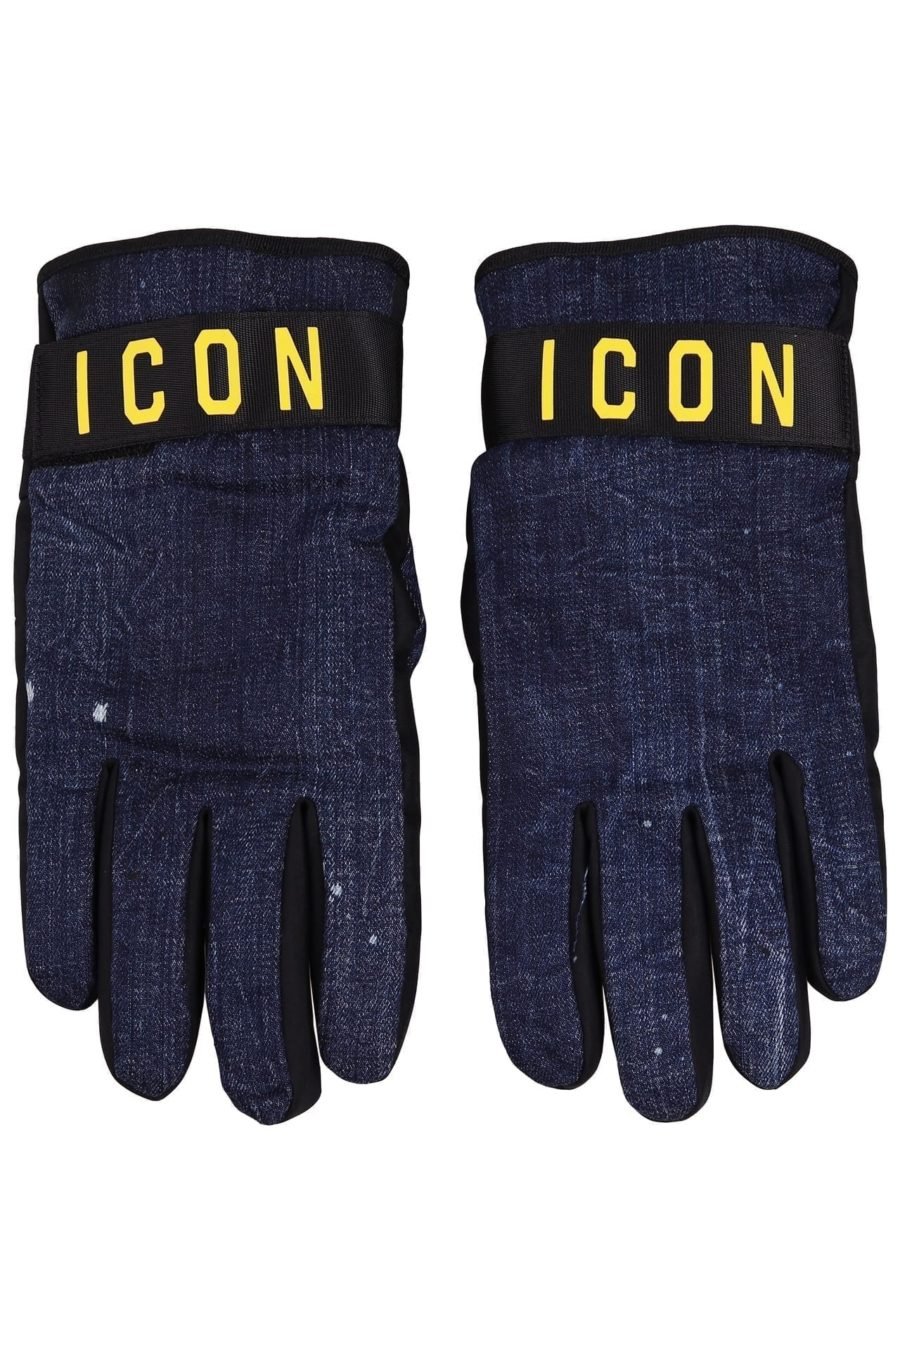 Gloves Dsquared2 ICON blue - fba9c427402a227da13cb0c58b1fec729d72825c